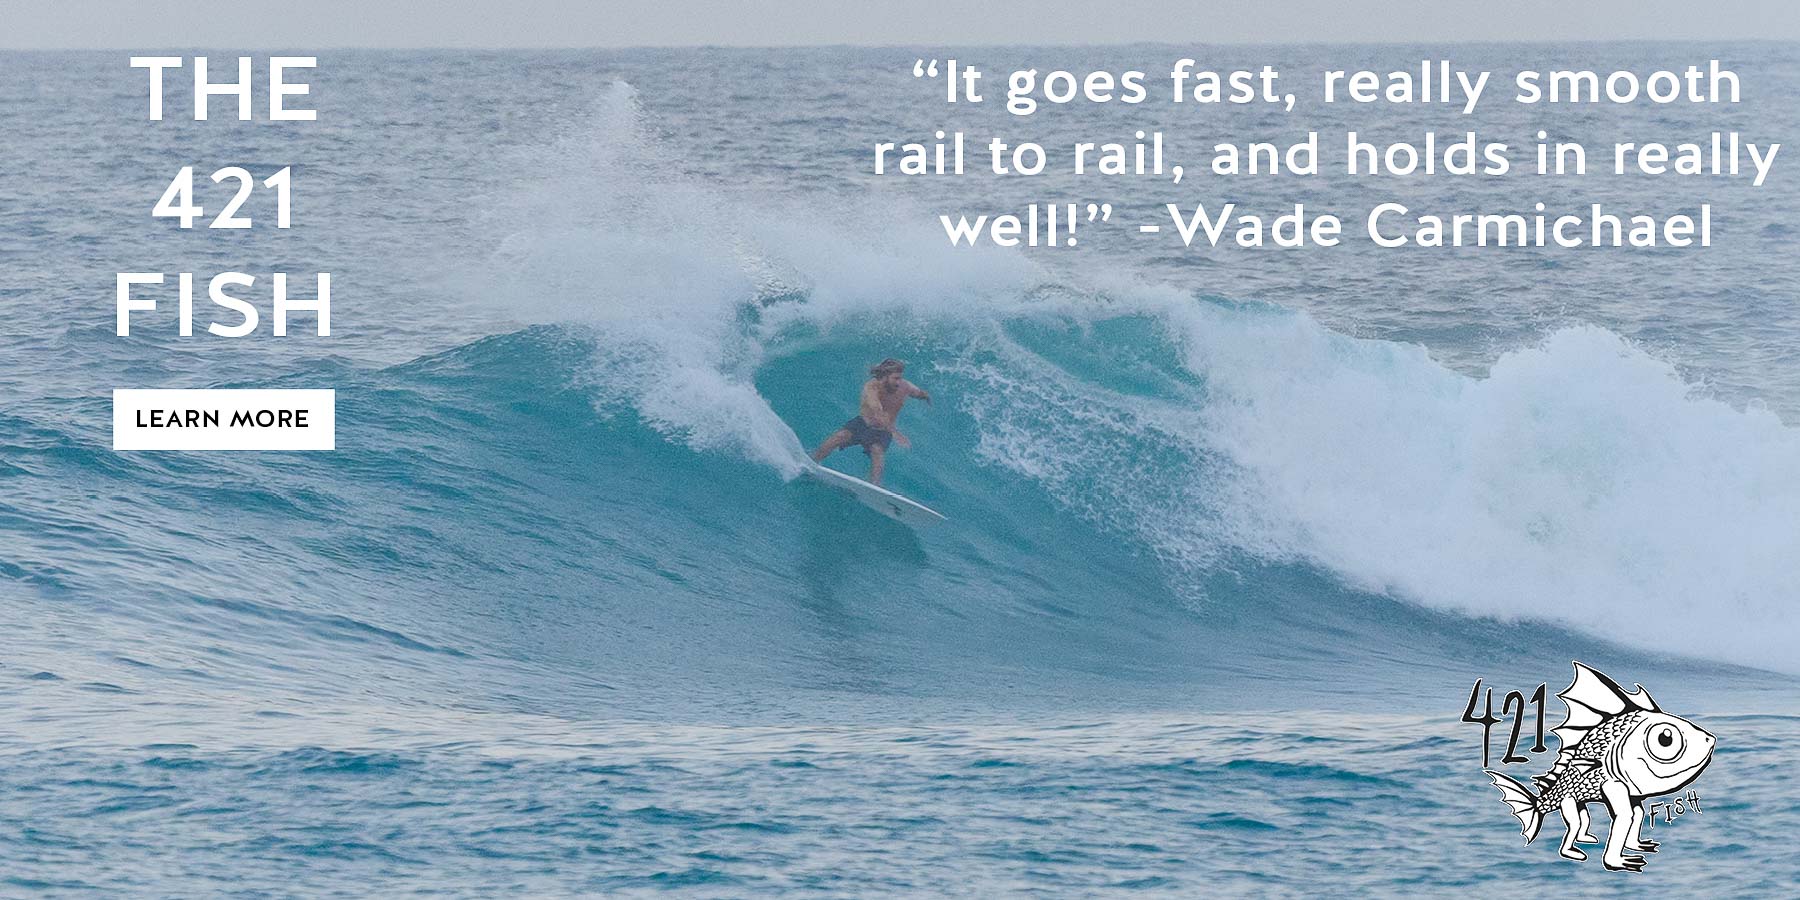 Wade Carmichael riding the 421 Fish in Salina Cruz - Rusty Surfboards - Desktop